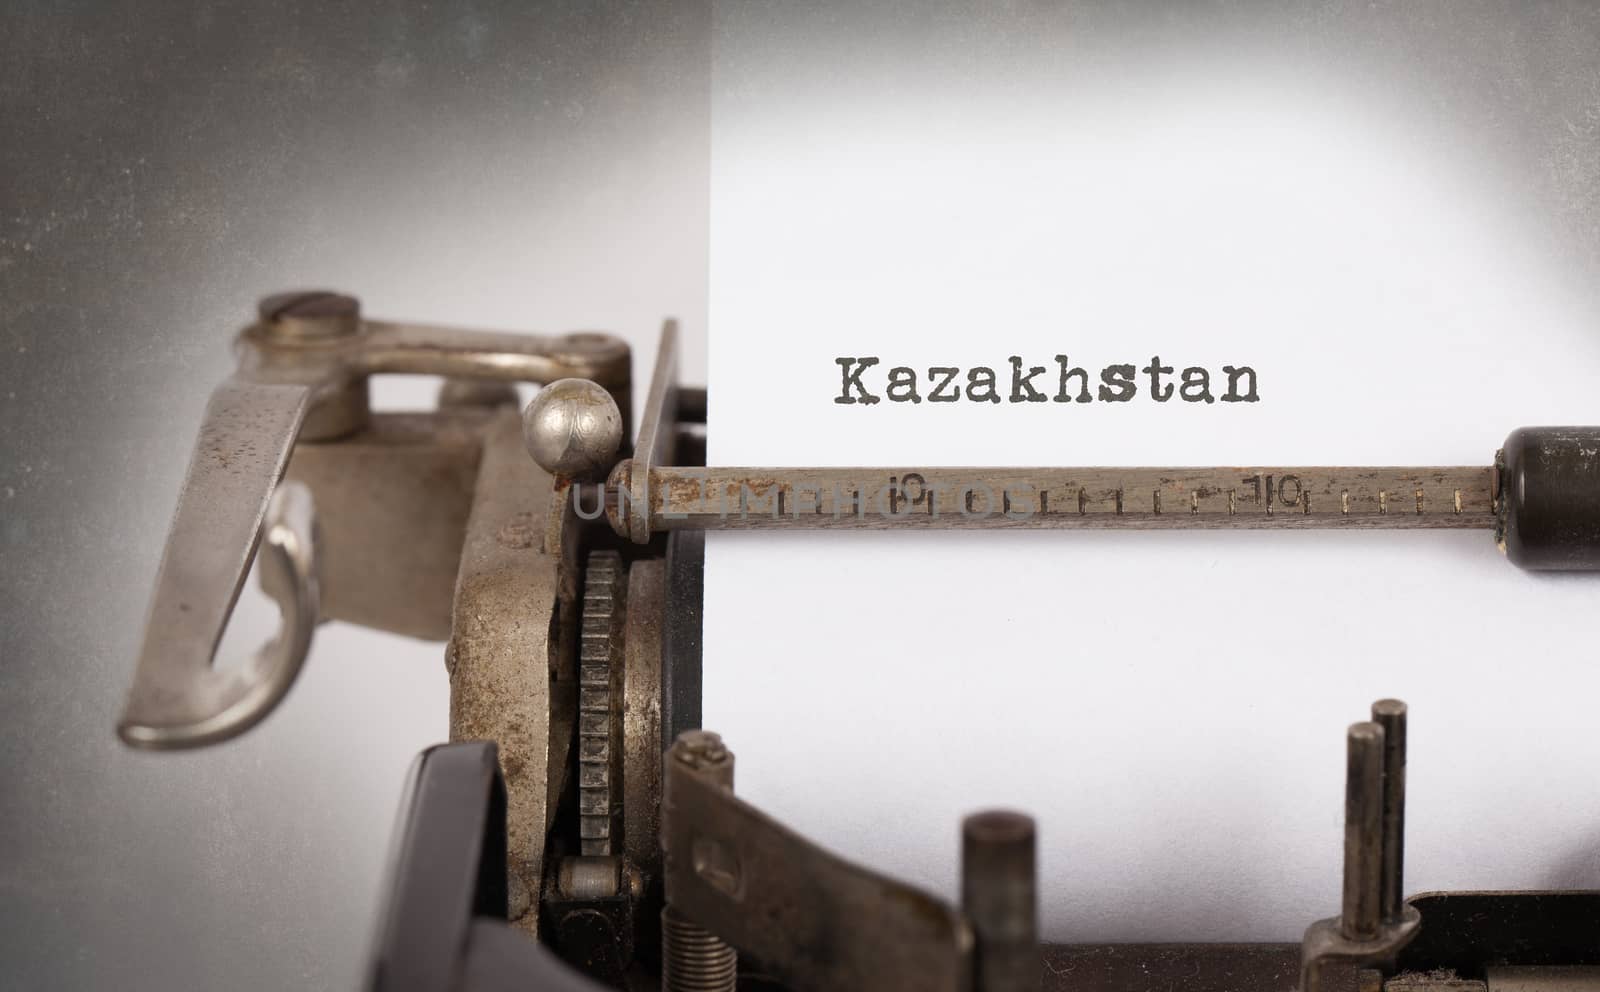 Old typewriter - Kazakhstan by michaklootwijk